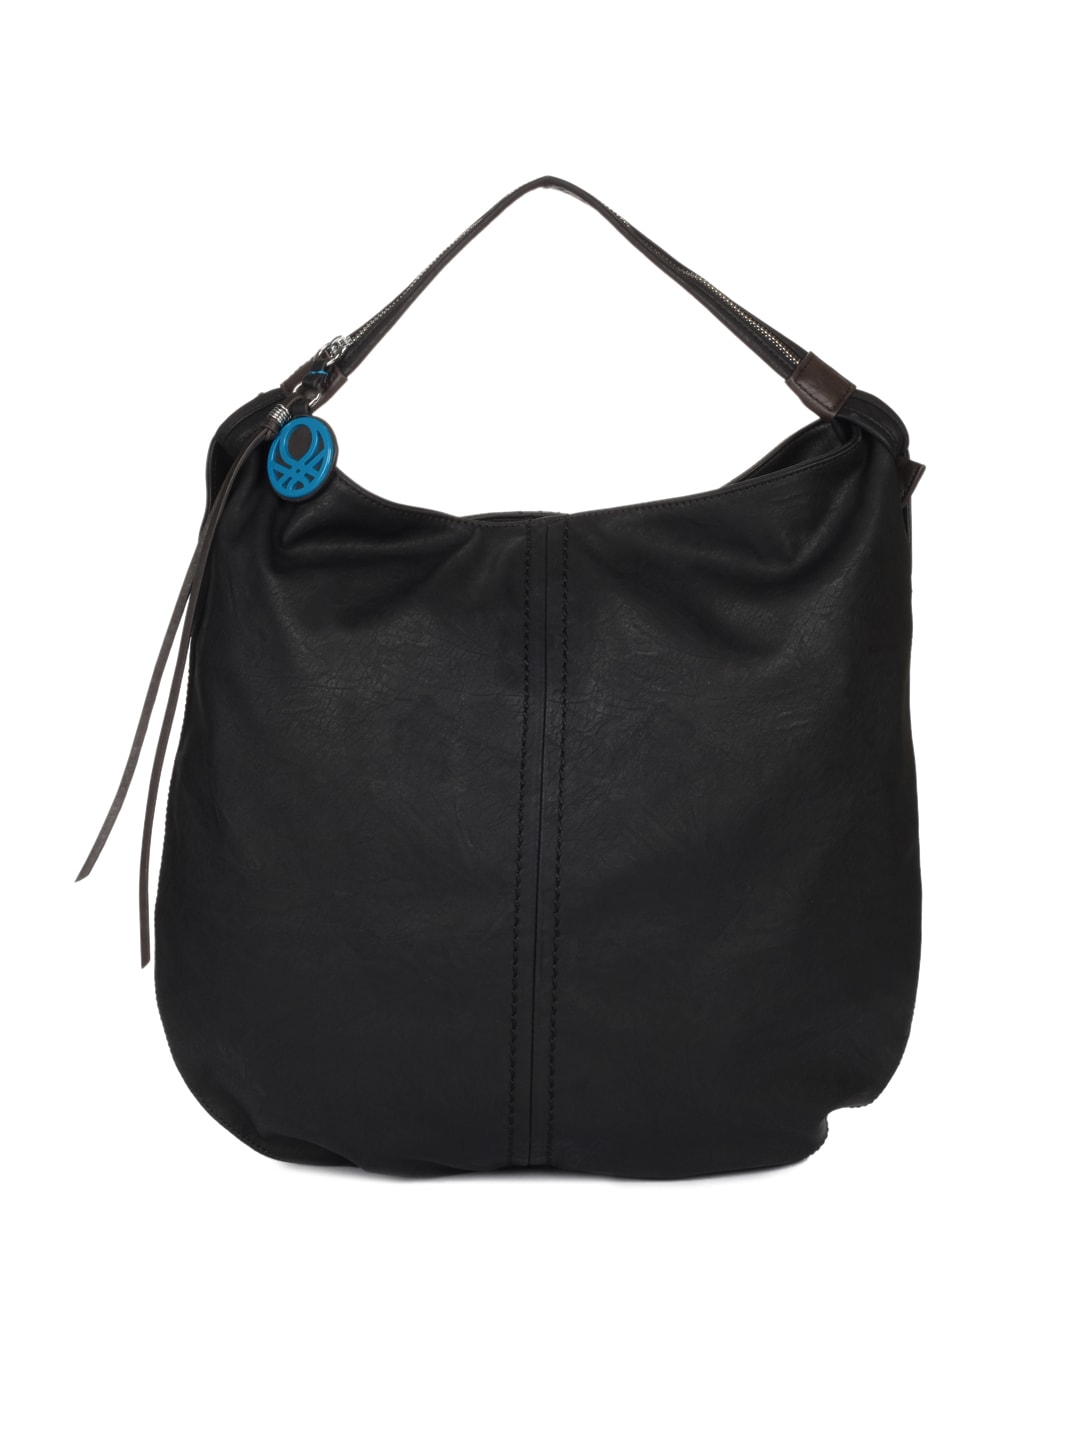 United Colors of Benetton Women Black Bag